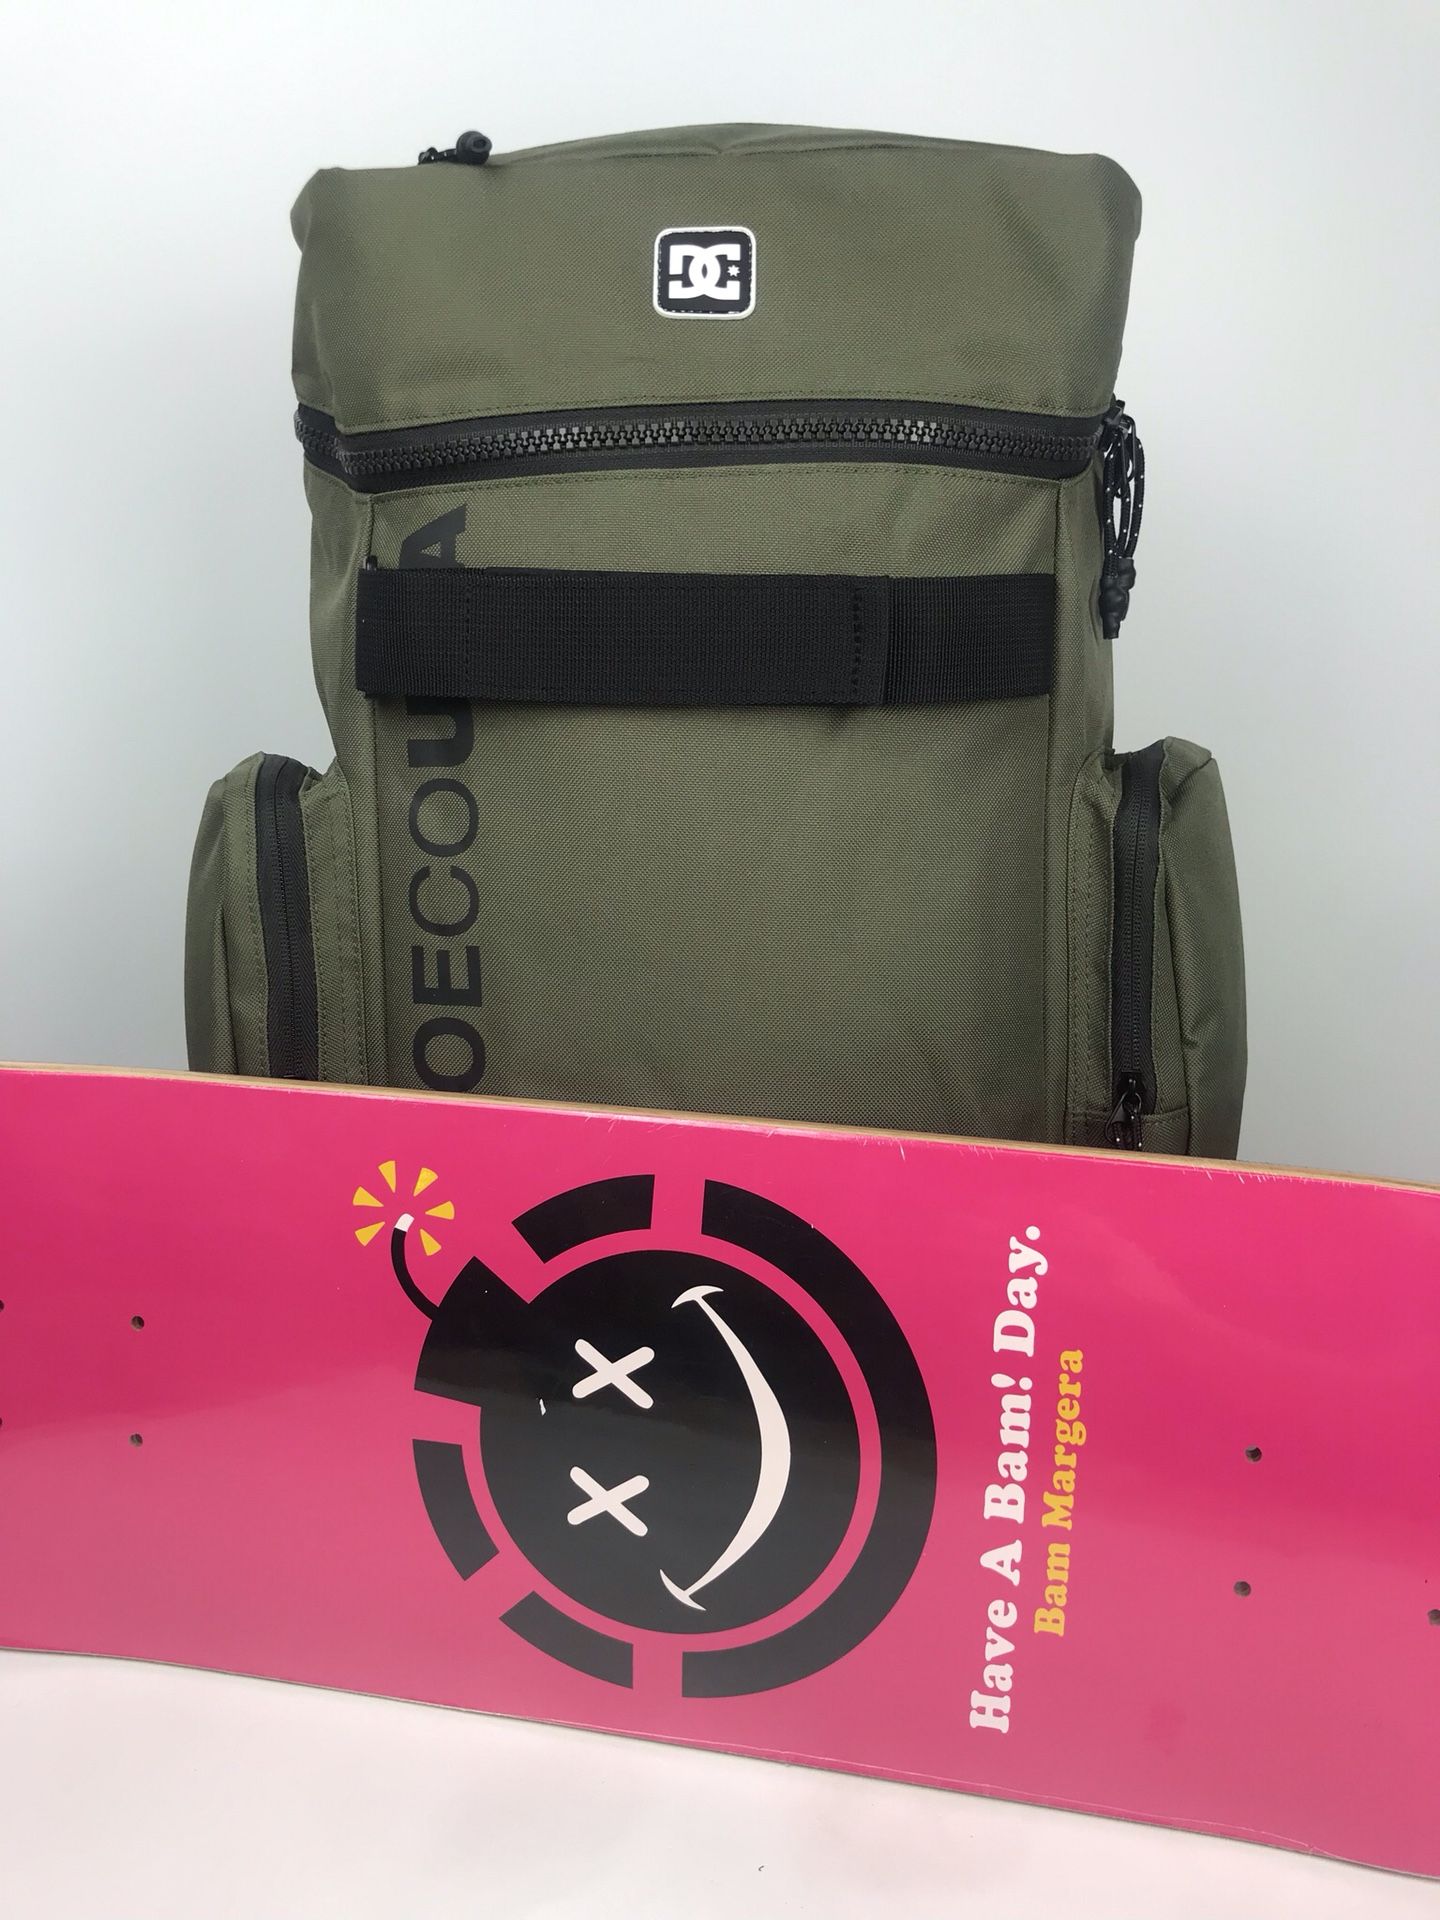 DC Shoe Co. Top Dunker Green Backpack + Bam Margera Skateboard Deck - Brand New 25th Anniversary Skate Deck for Bam Margera!